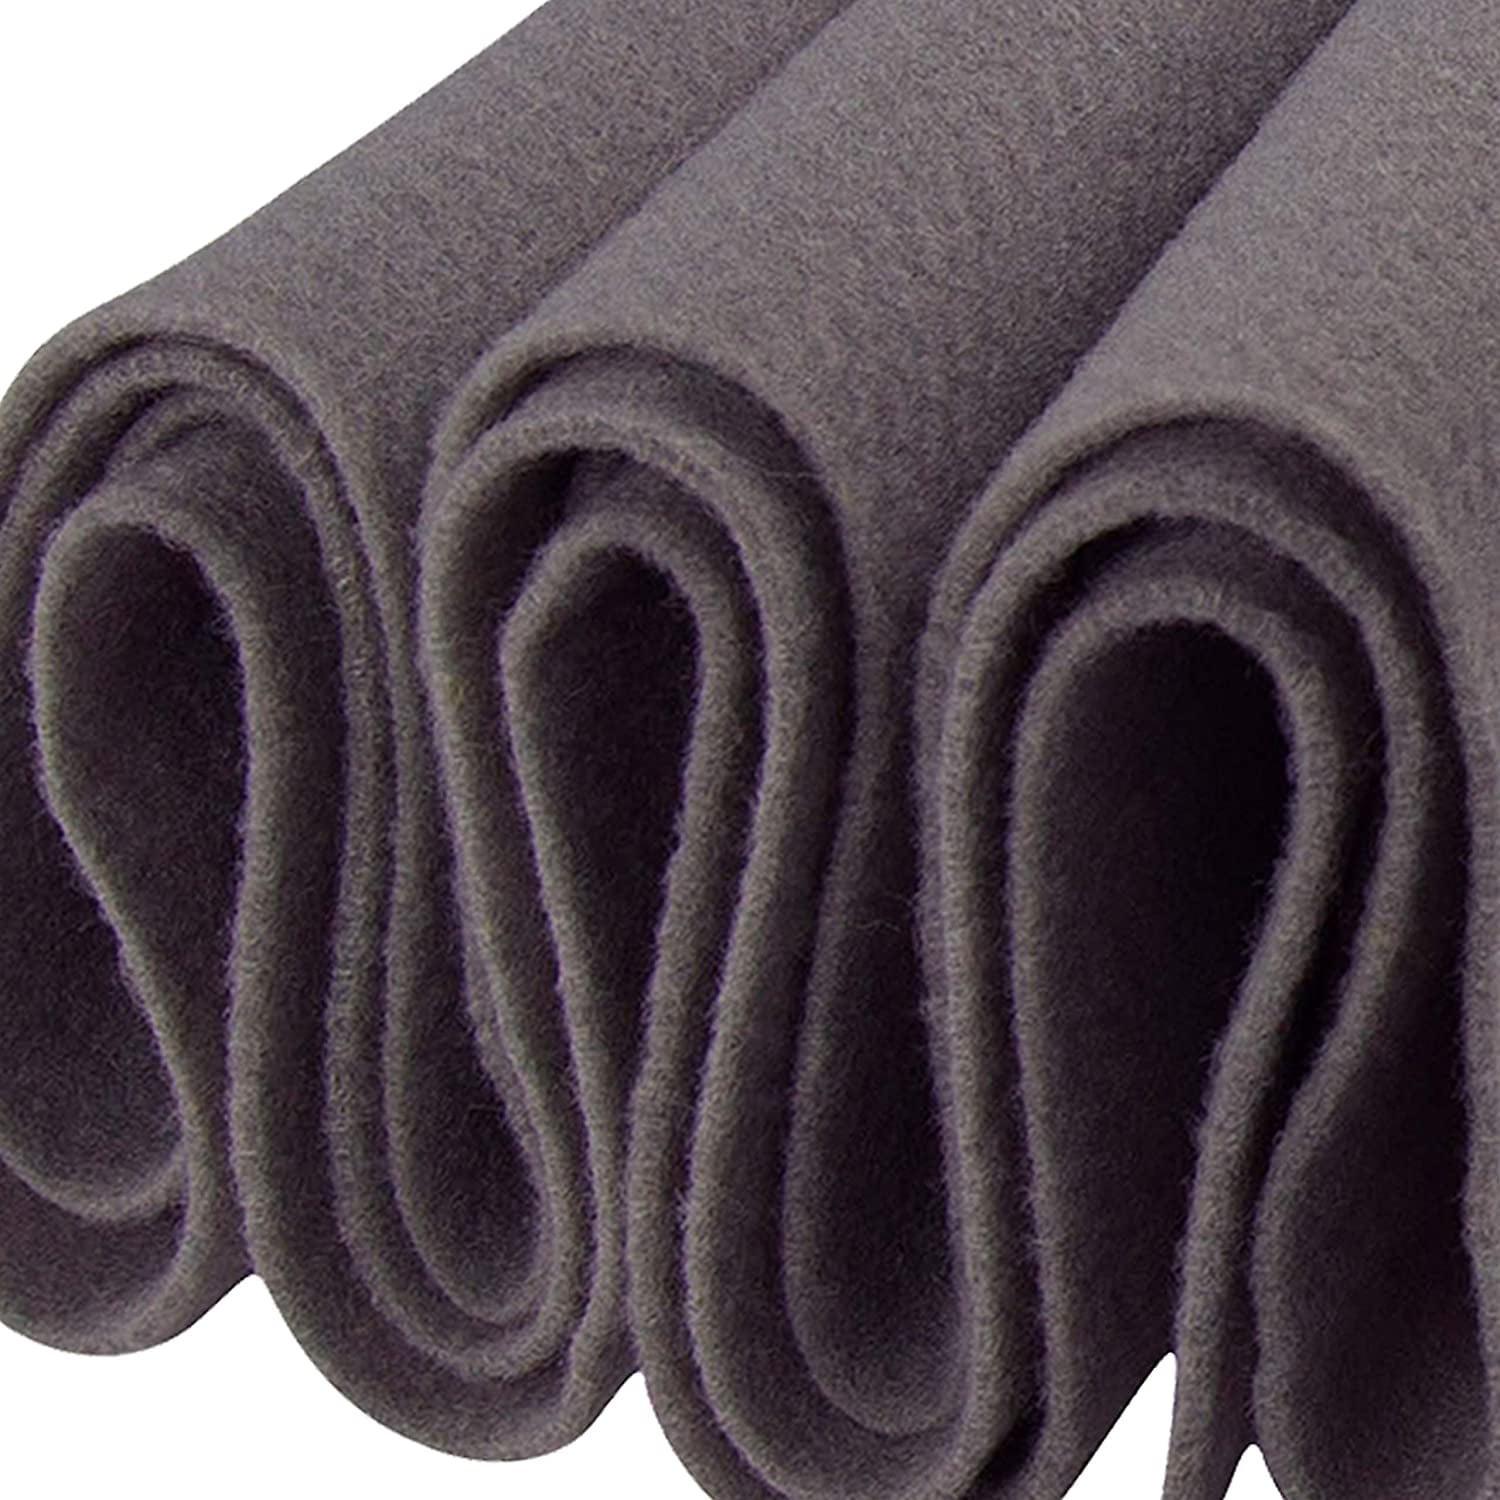 Thick Felt // Slate Gray // 3mm Merino Wool Felt Sheets, Bag Making,  Interior Design, Thick Fabric, Dense Felt, Felt Stitching 